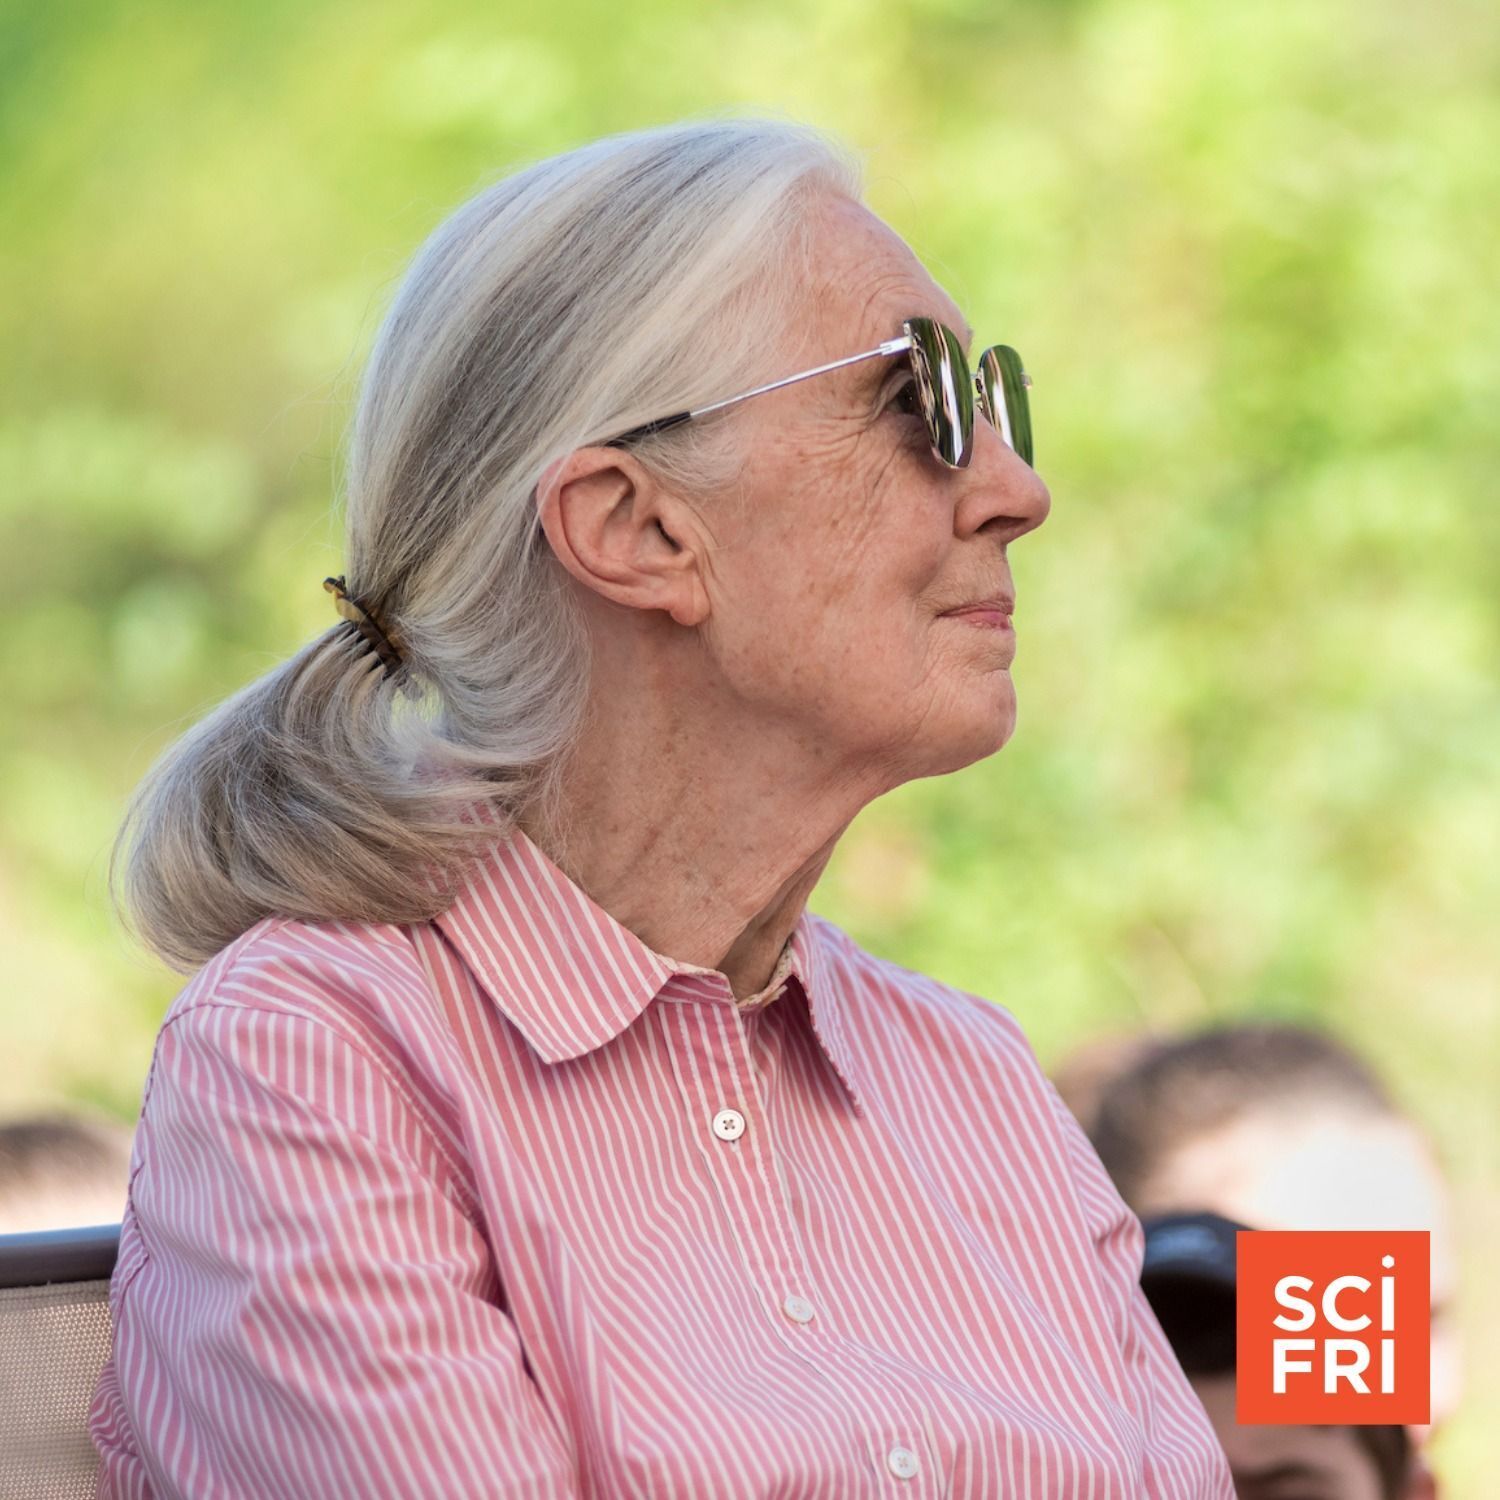 655: Jane Goodall On Life Among Chimpanzees